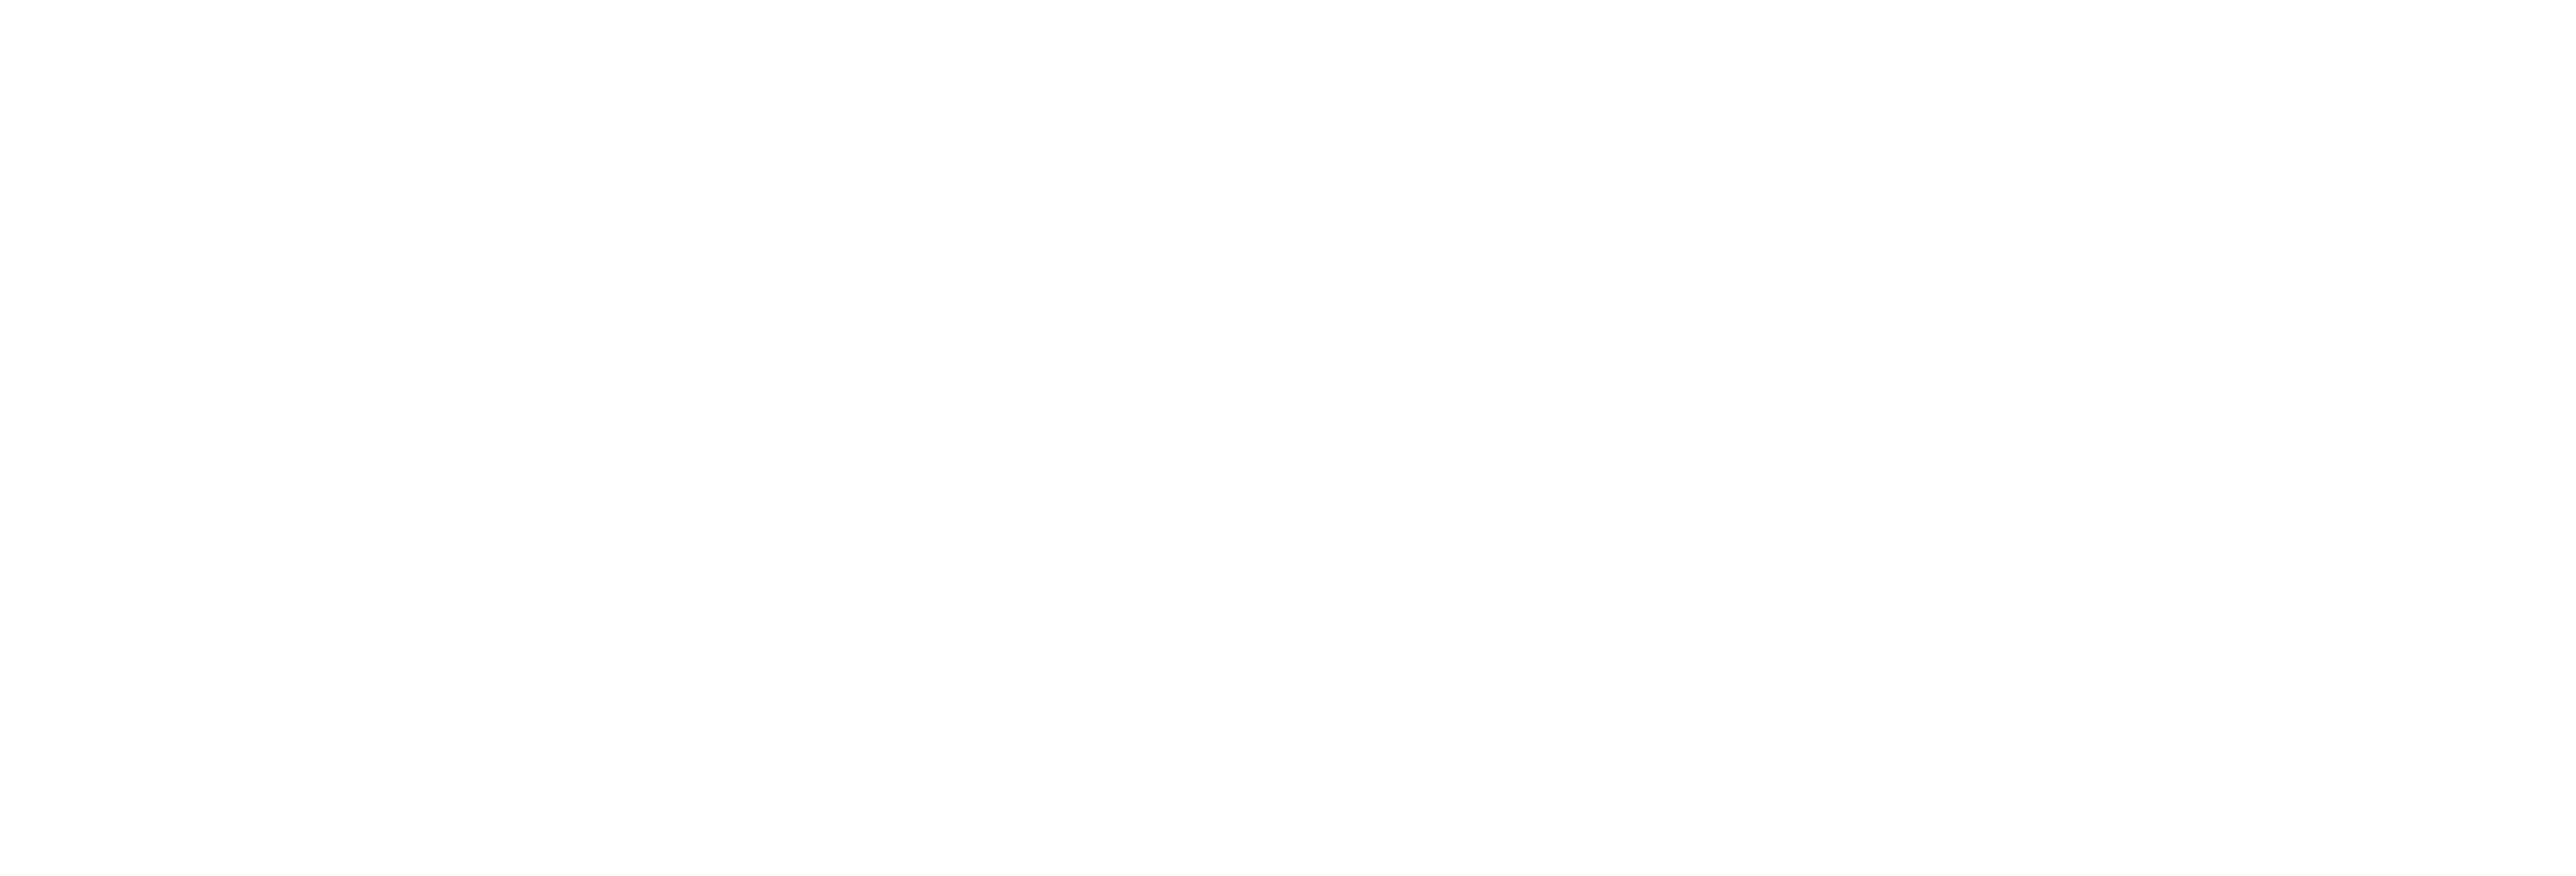 Patriot Astrophotography